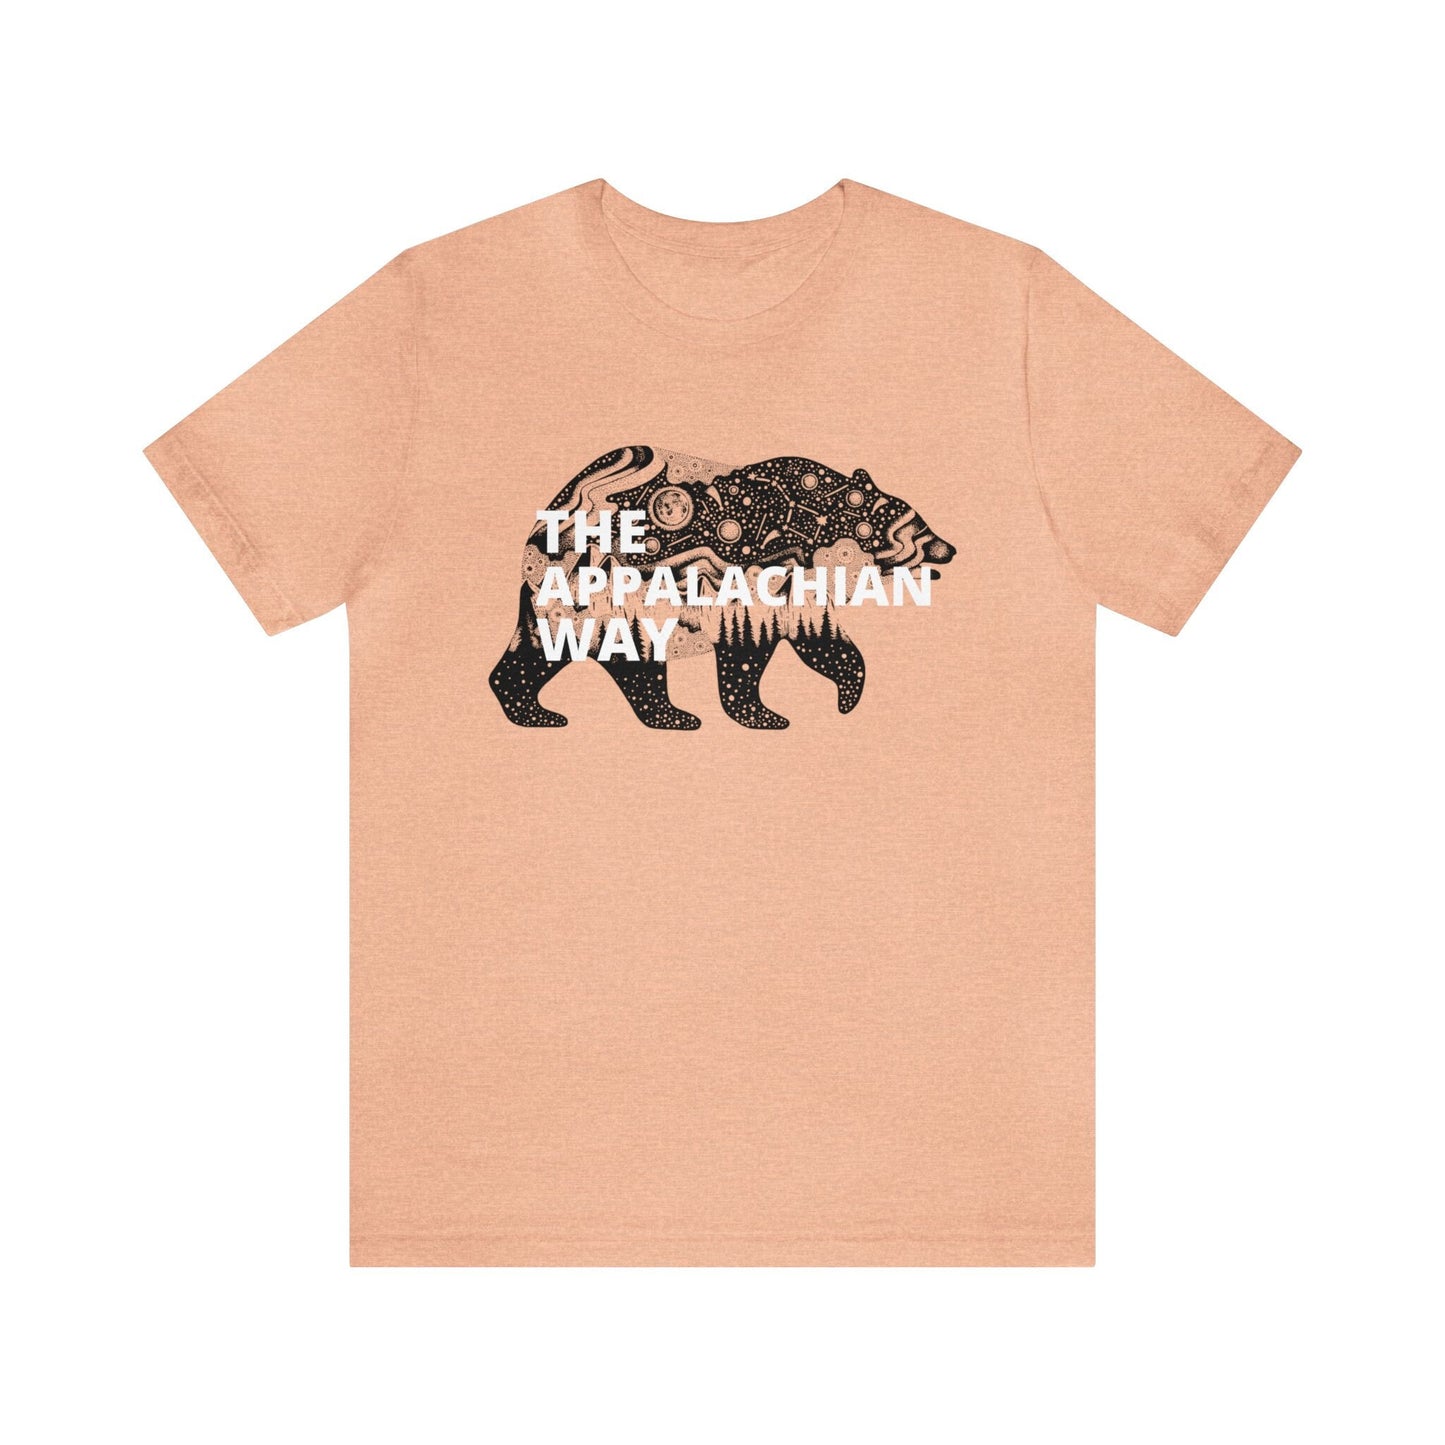 Bear Nature Graphic The Appalachian Way T-shirt| Adventure Awaits Tee Shirt, Nature Camp Tee Shirt, The Great Outdoors shirt, Mom Gift Shirt